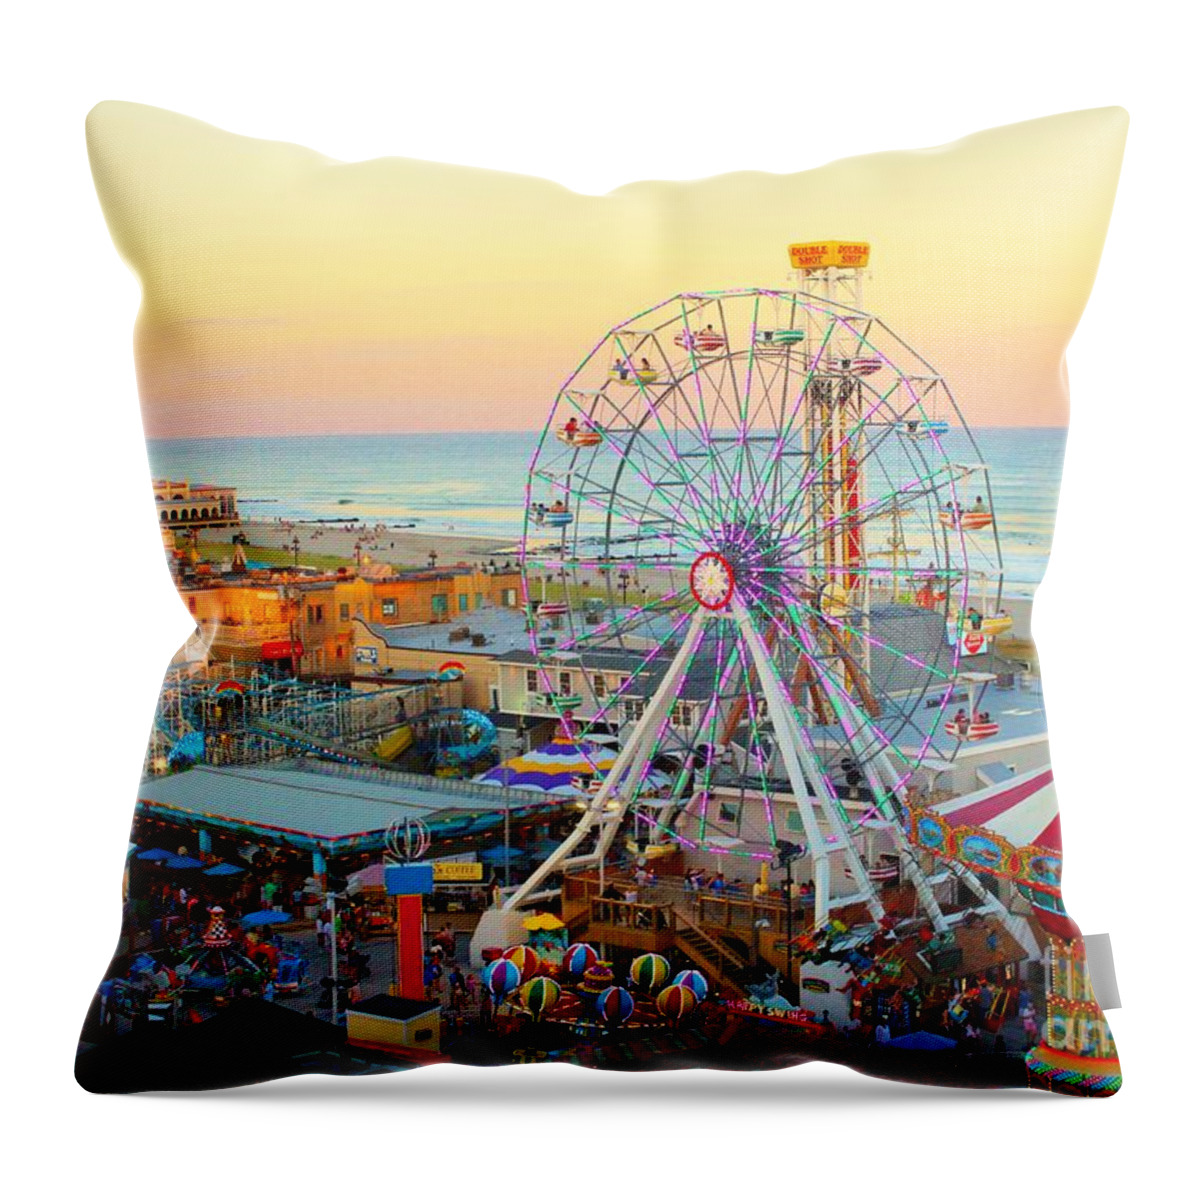 Ocean City Throw Pillow featuring the photograph Ocean City New Jersey Boardwalk by Beth Ferris Sale